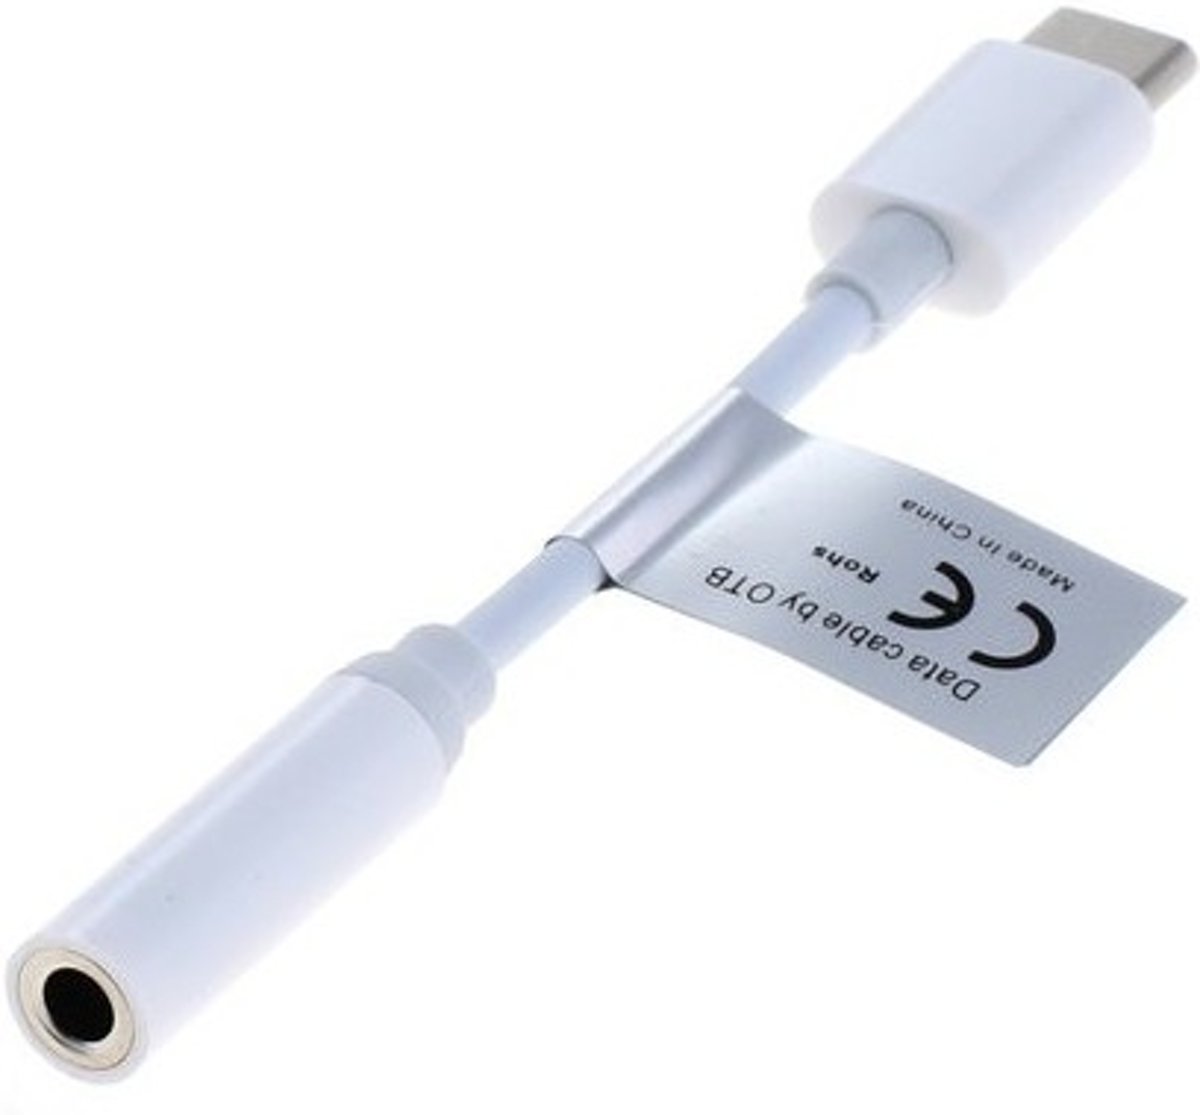 OTB-audioadapter (USB-C) - 3,5 mm stereo-installatie met kabel